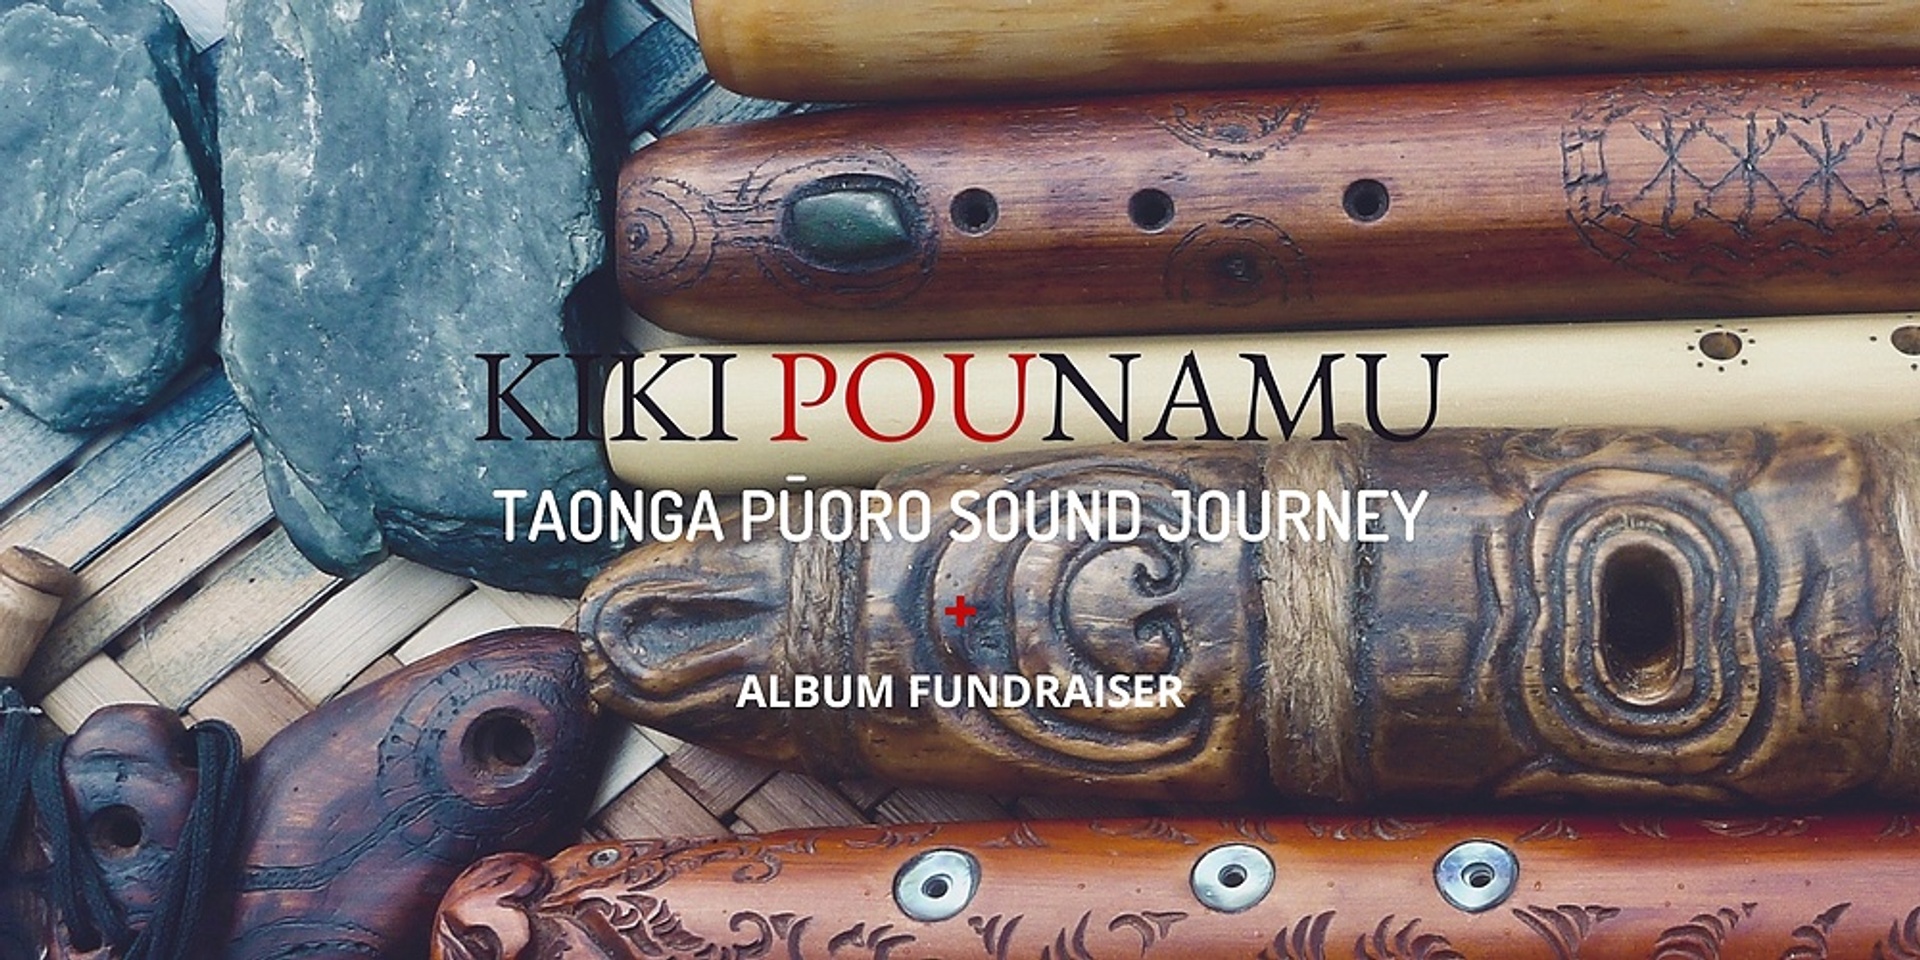 Kiki Pounamu - Taonga Pūoro Sound Journey + Album Fundraiser